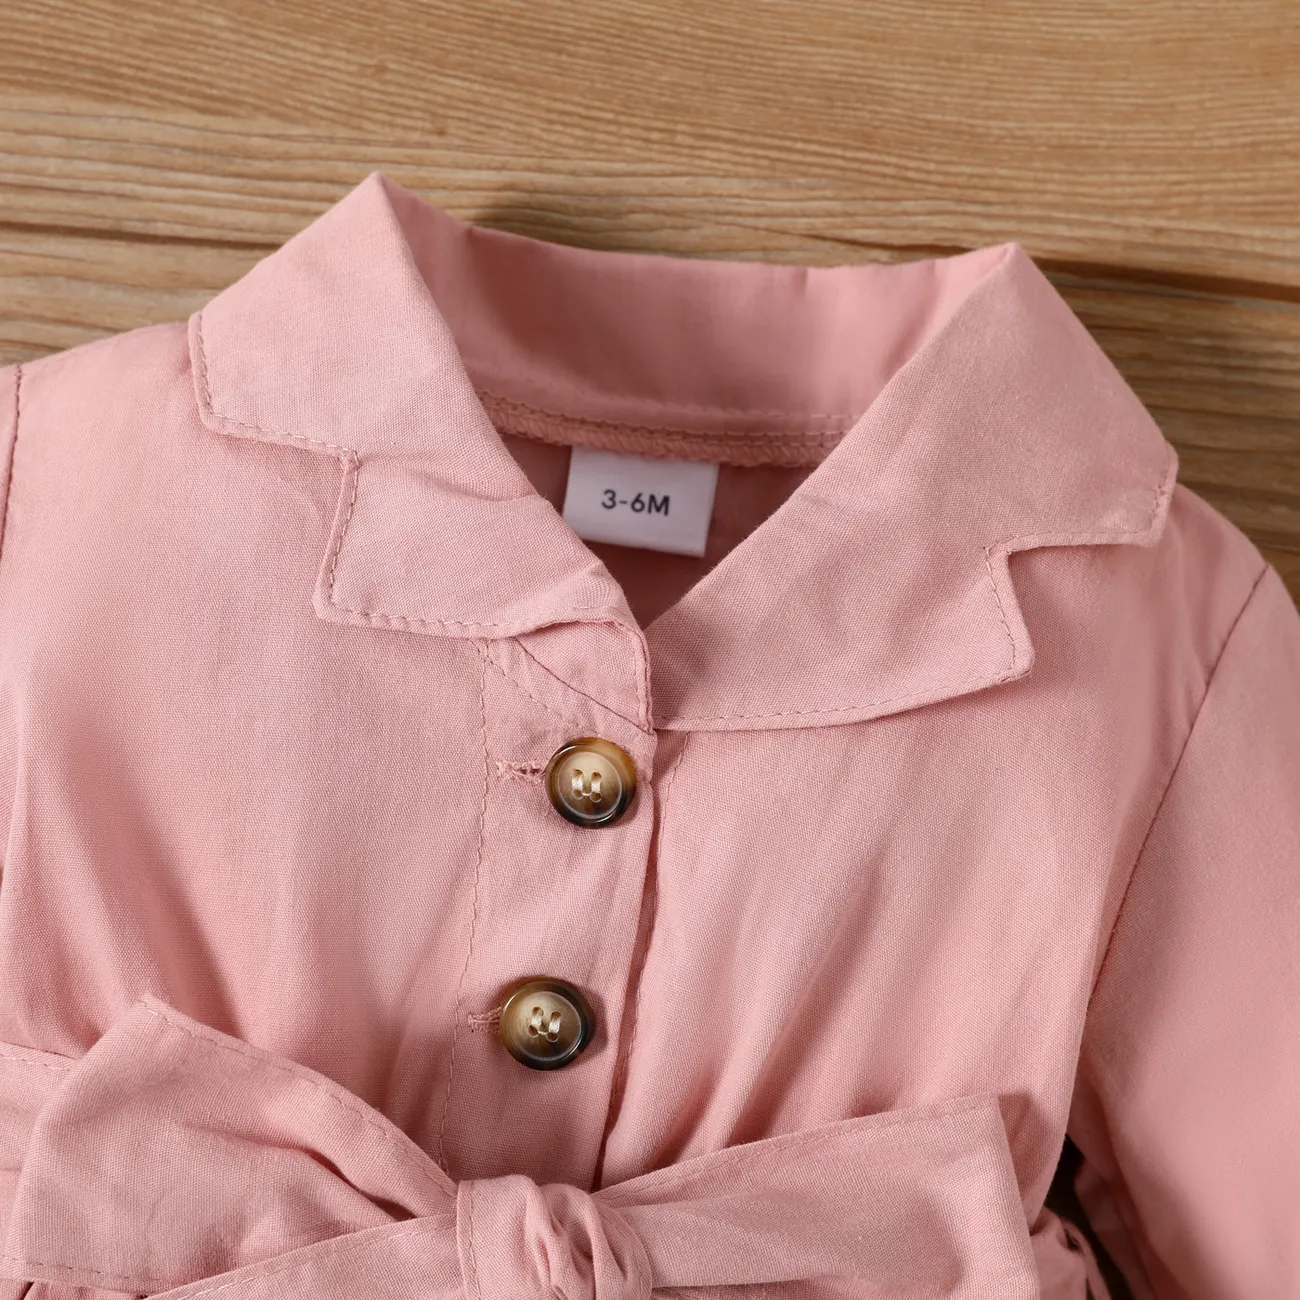 100% Cotton Baby Girl Green Lapel Single Breasted Long-sleeve Layered Ruffle Dress Pink big image 1